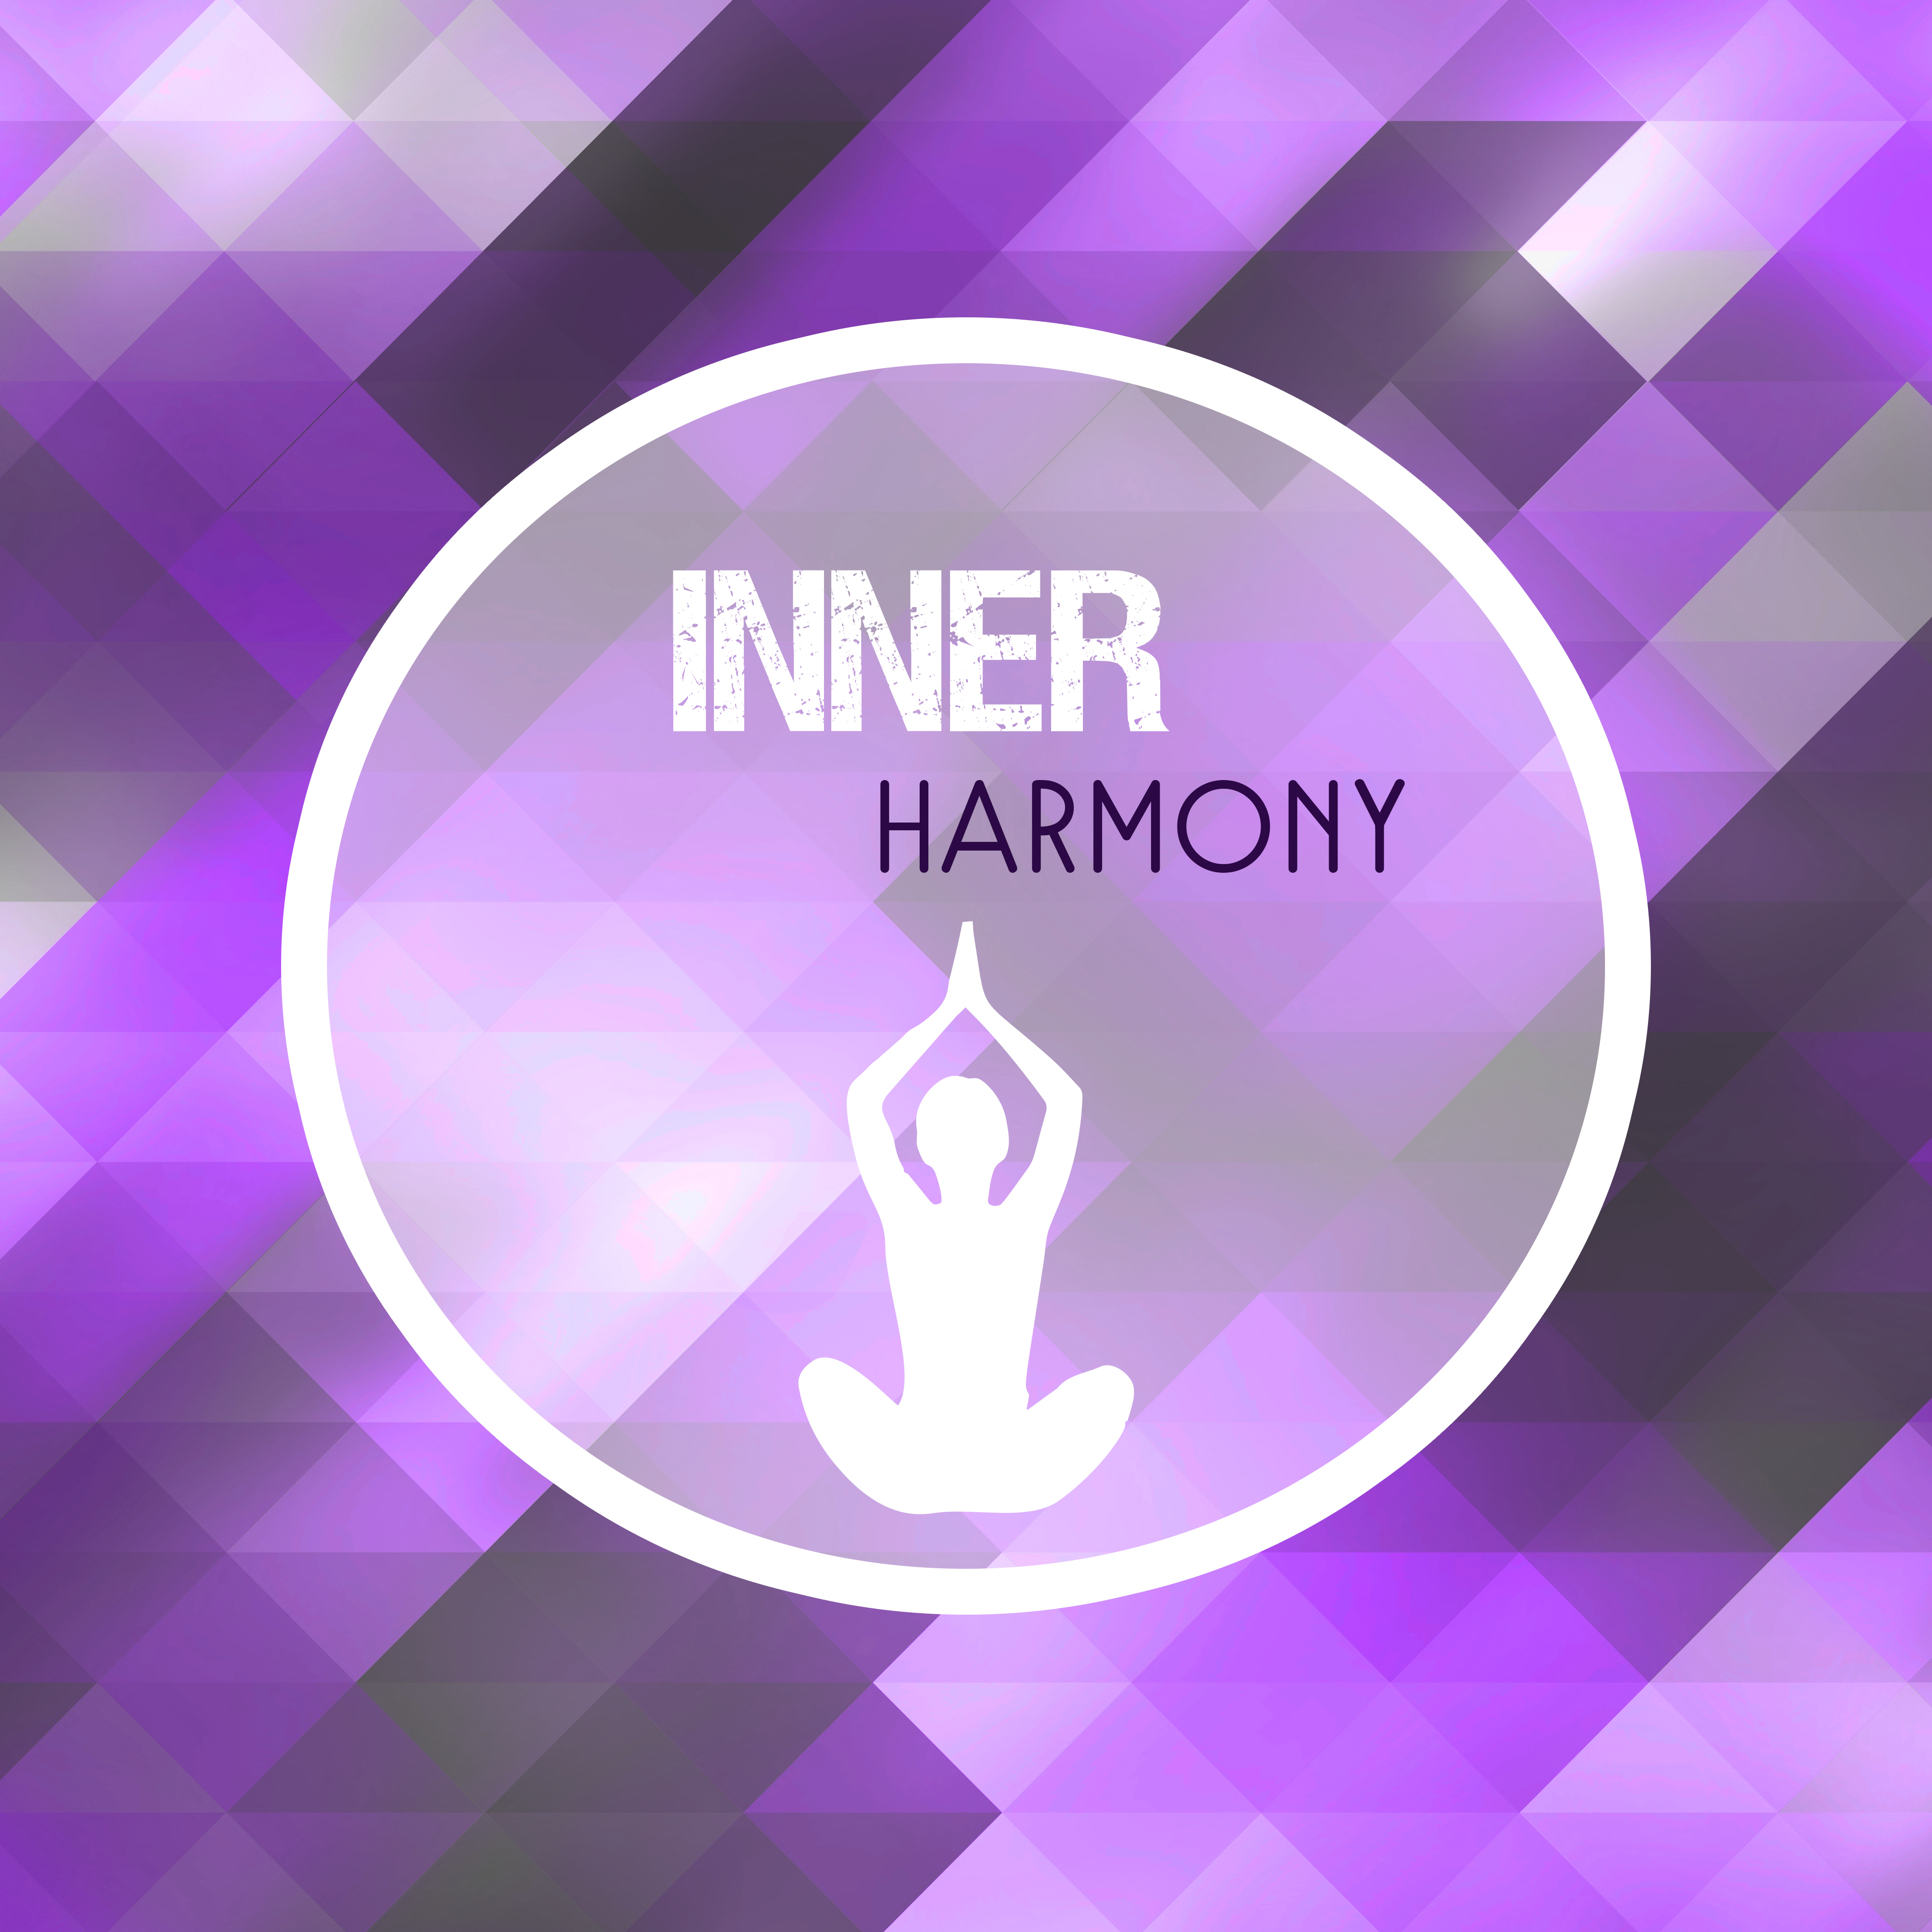 Inner Harmony  Healing Music, Bliss Relaxation, New Age Music 2017, Zen